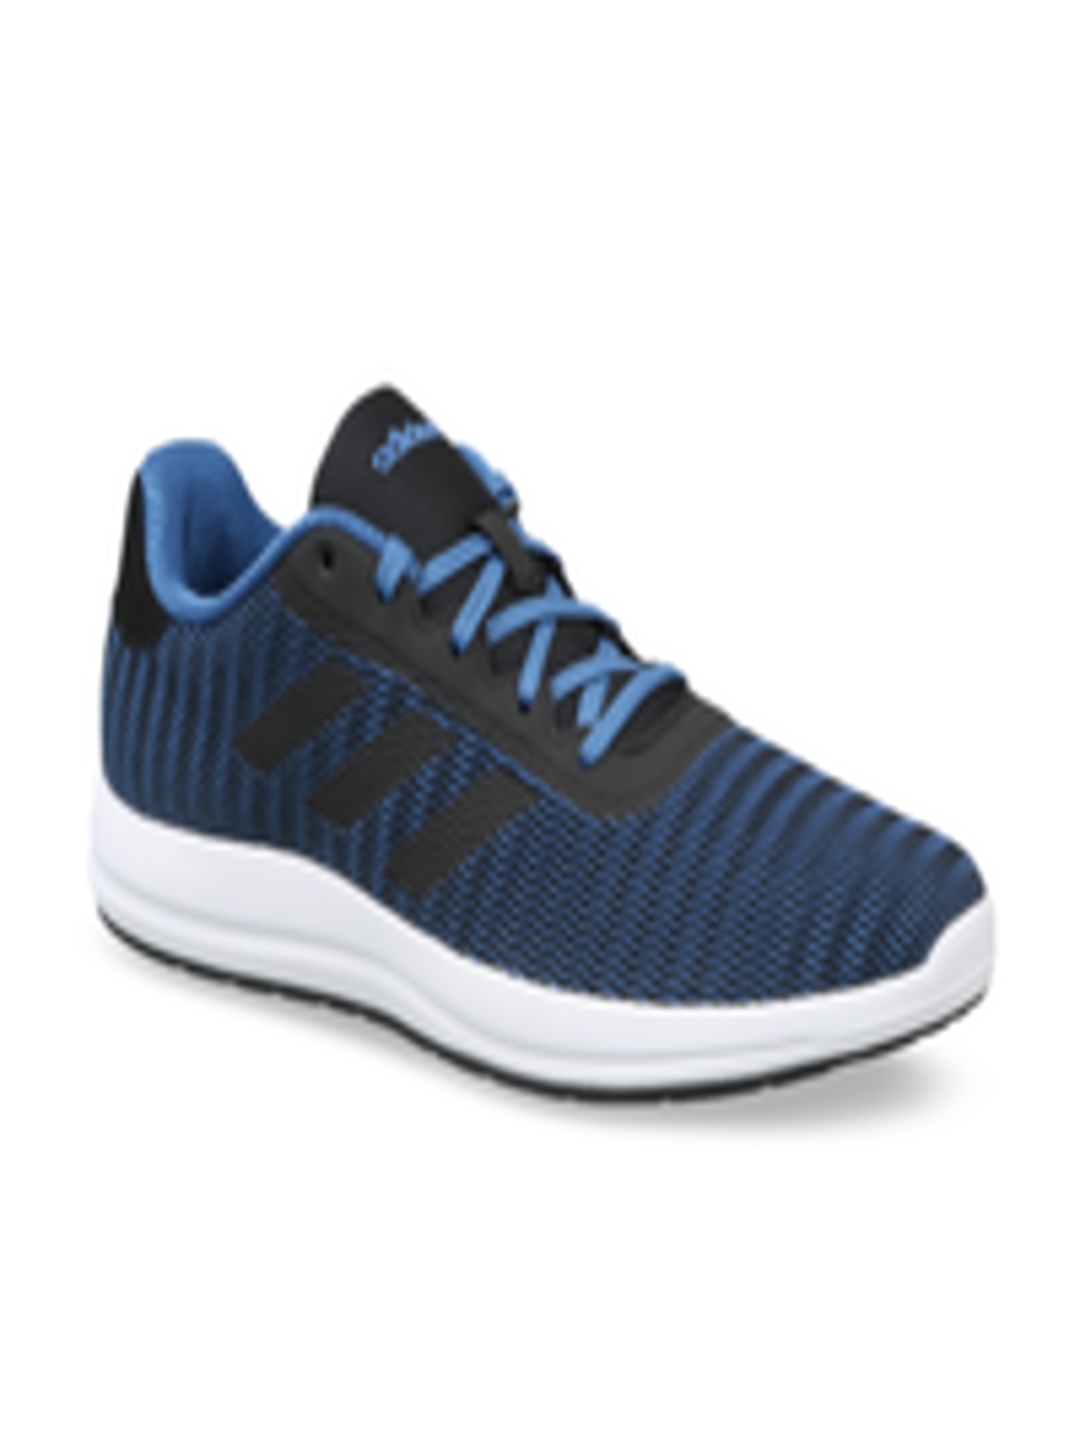 Buy ADIDAS Men Blue Mesh Running Shoes - Sports Shoes for Men 14019798 ...